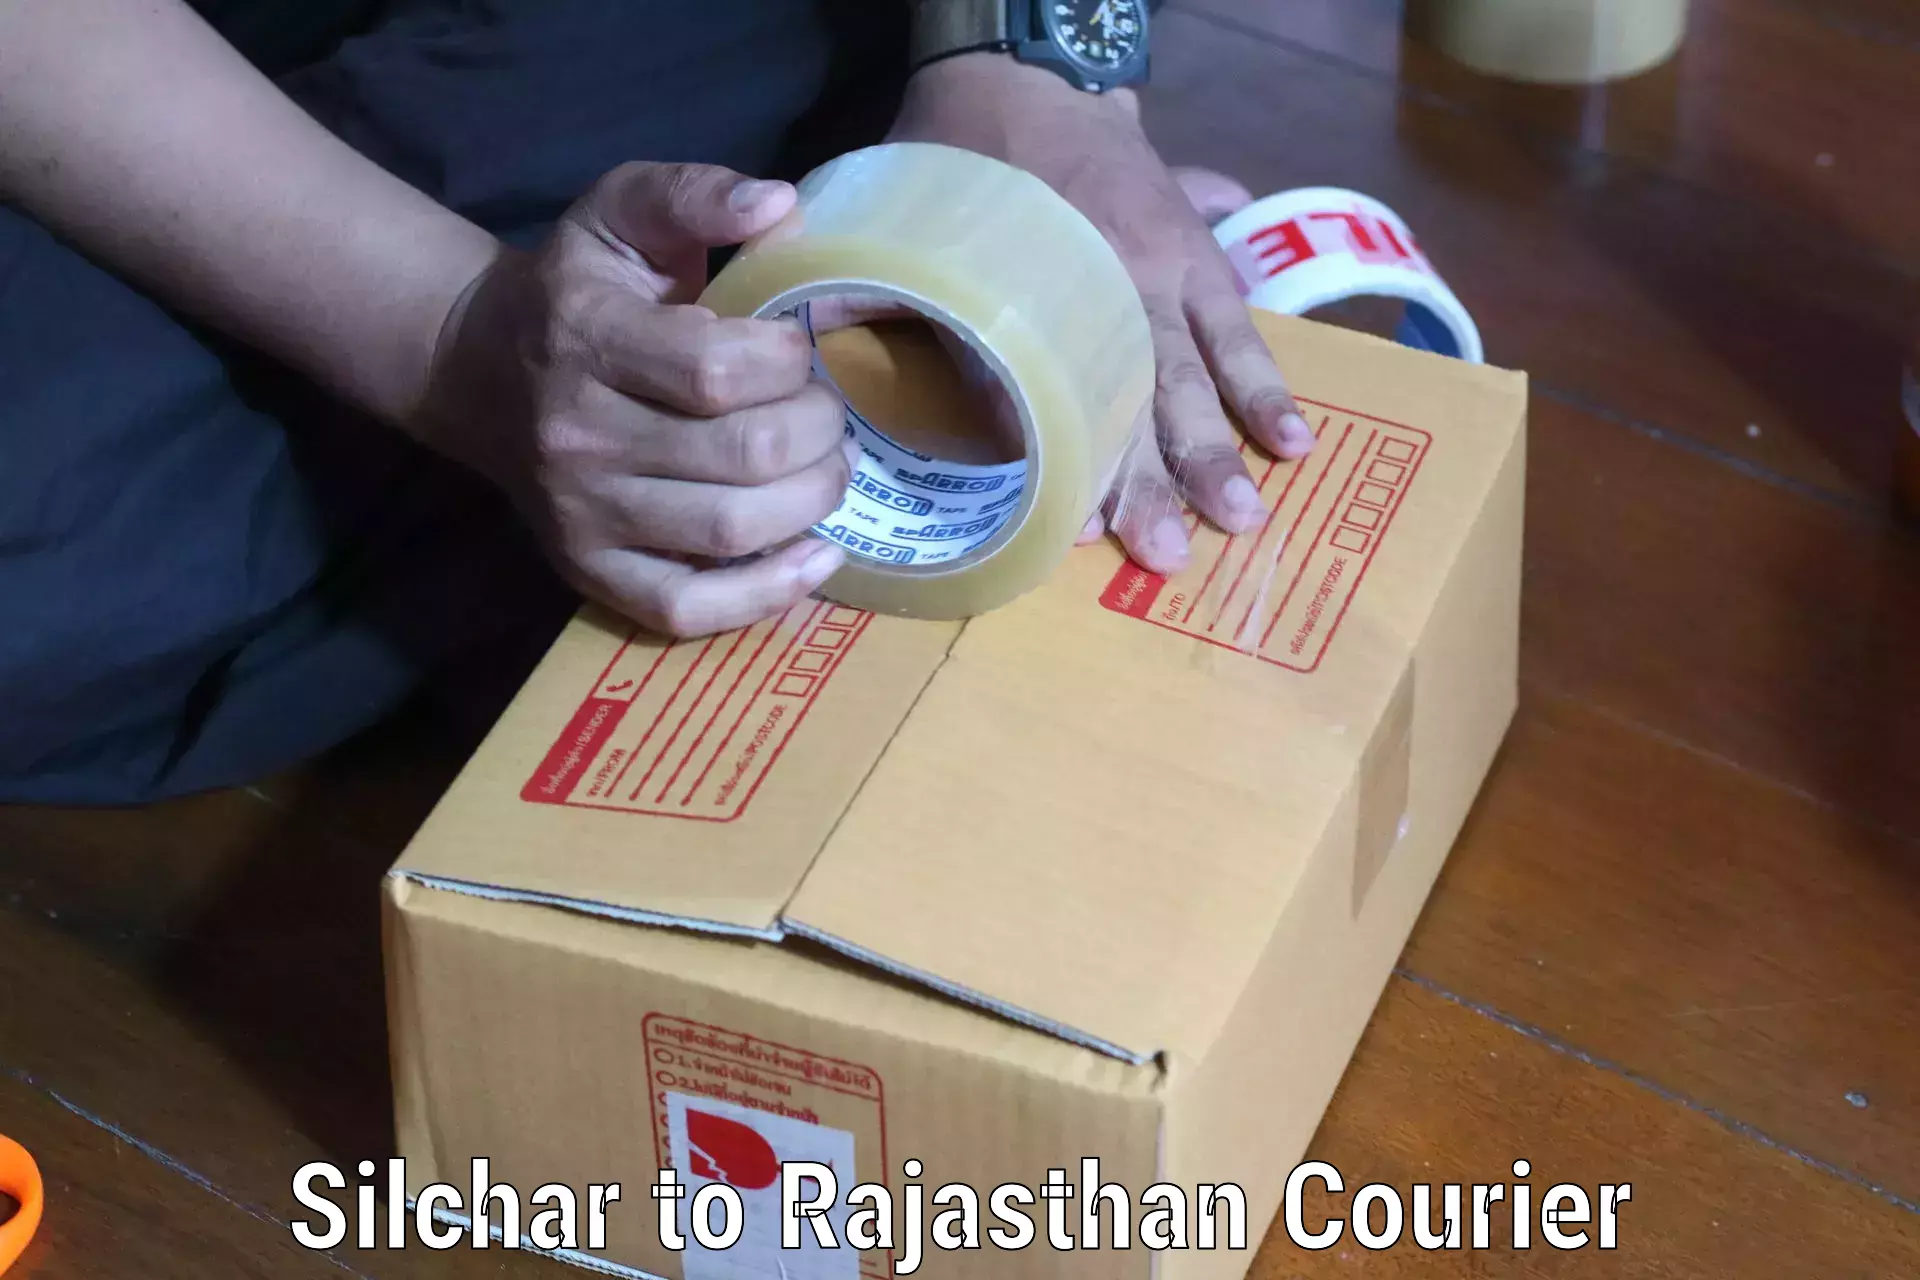 Logistics service provider Silchar to Rajasthan